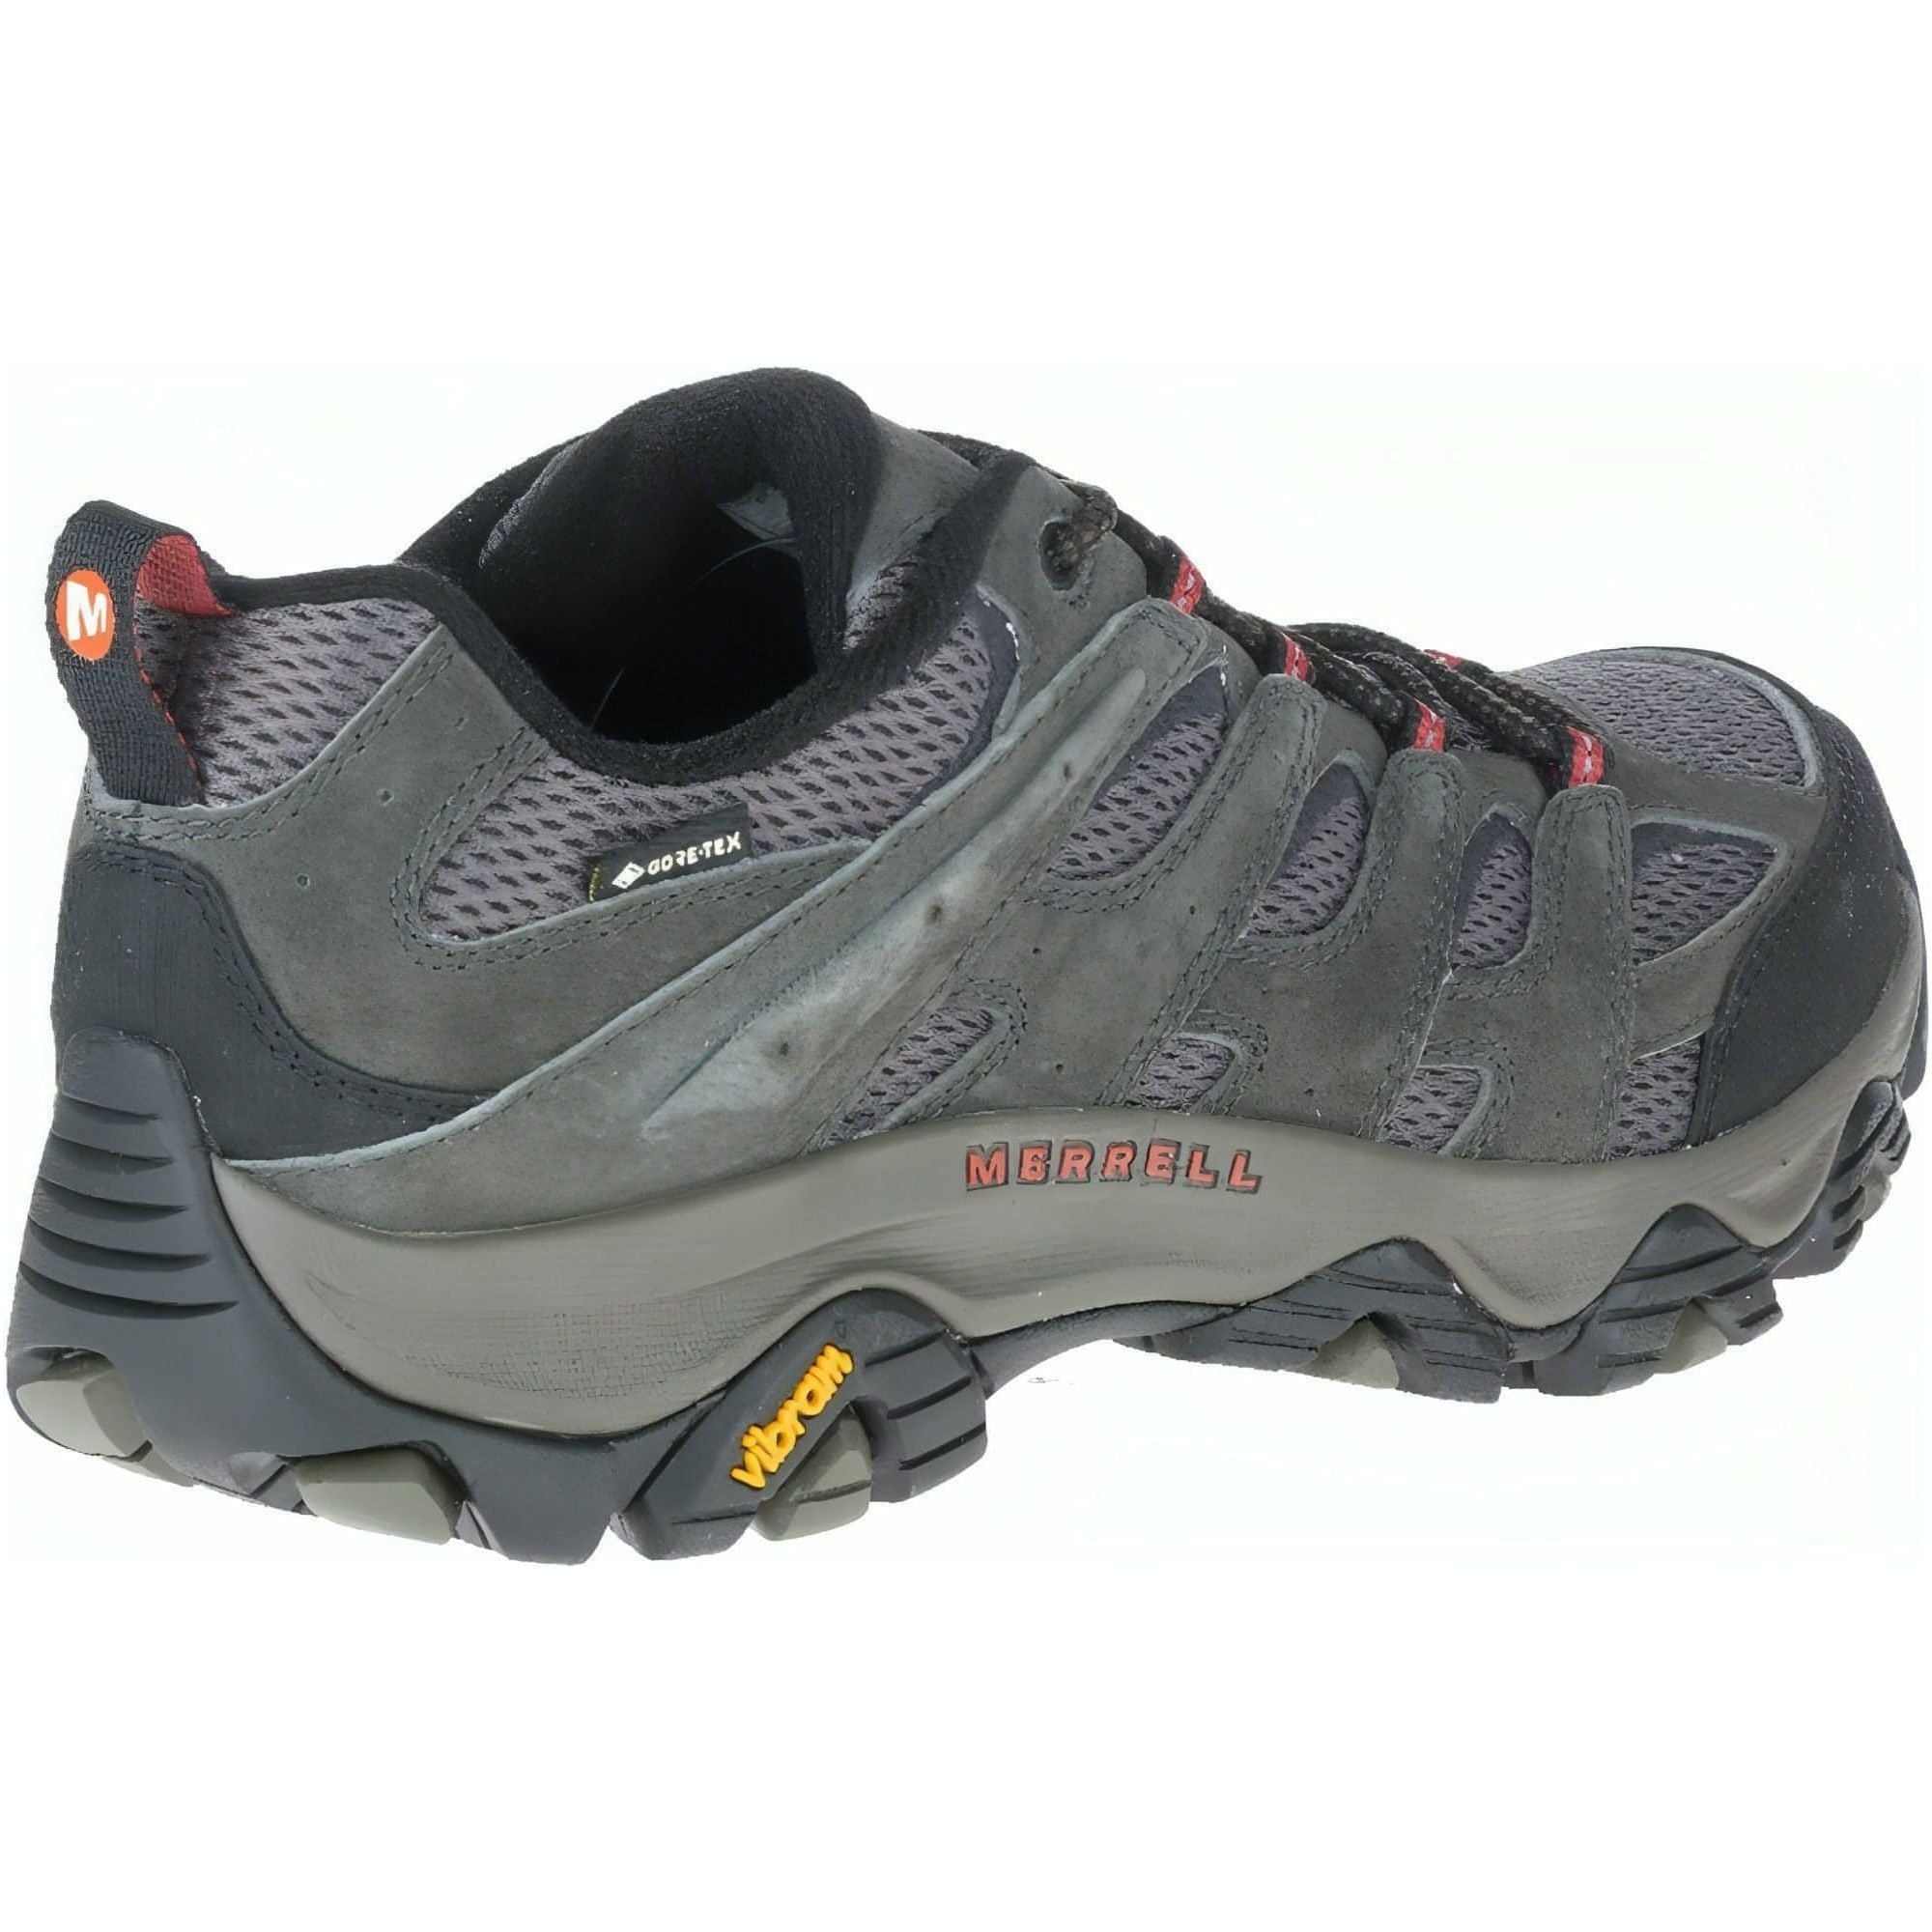 Merrell Moab 3 GTX Mens Walking Shoes - Grey